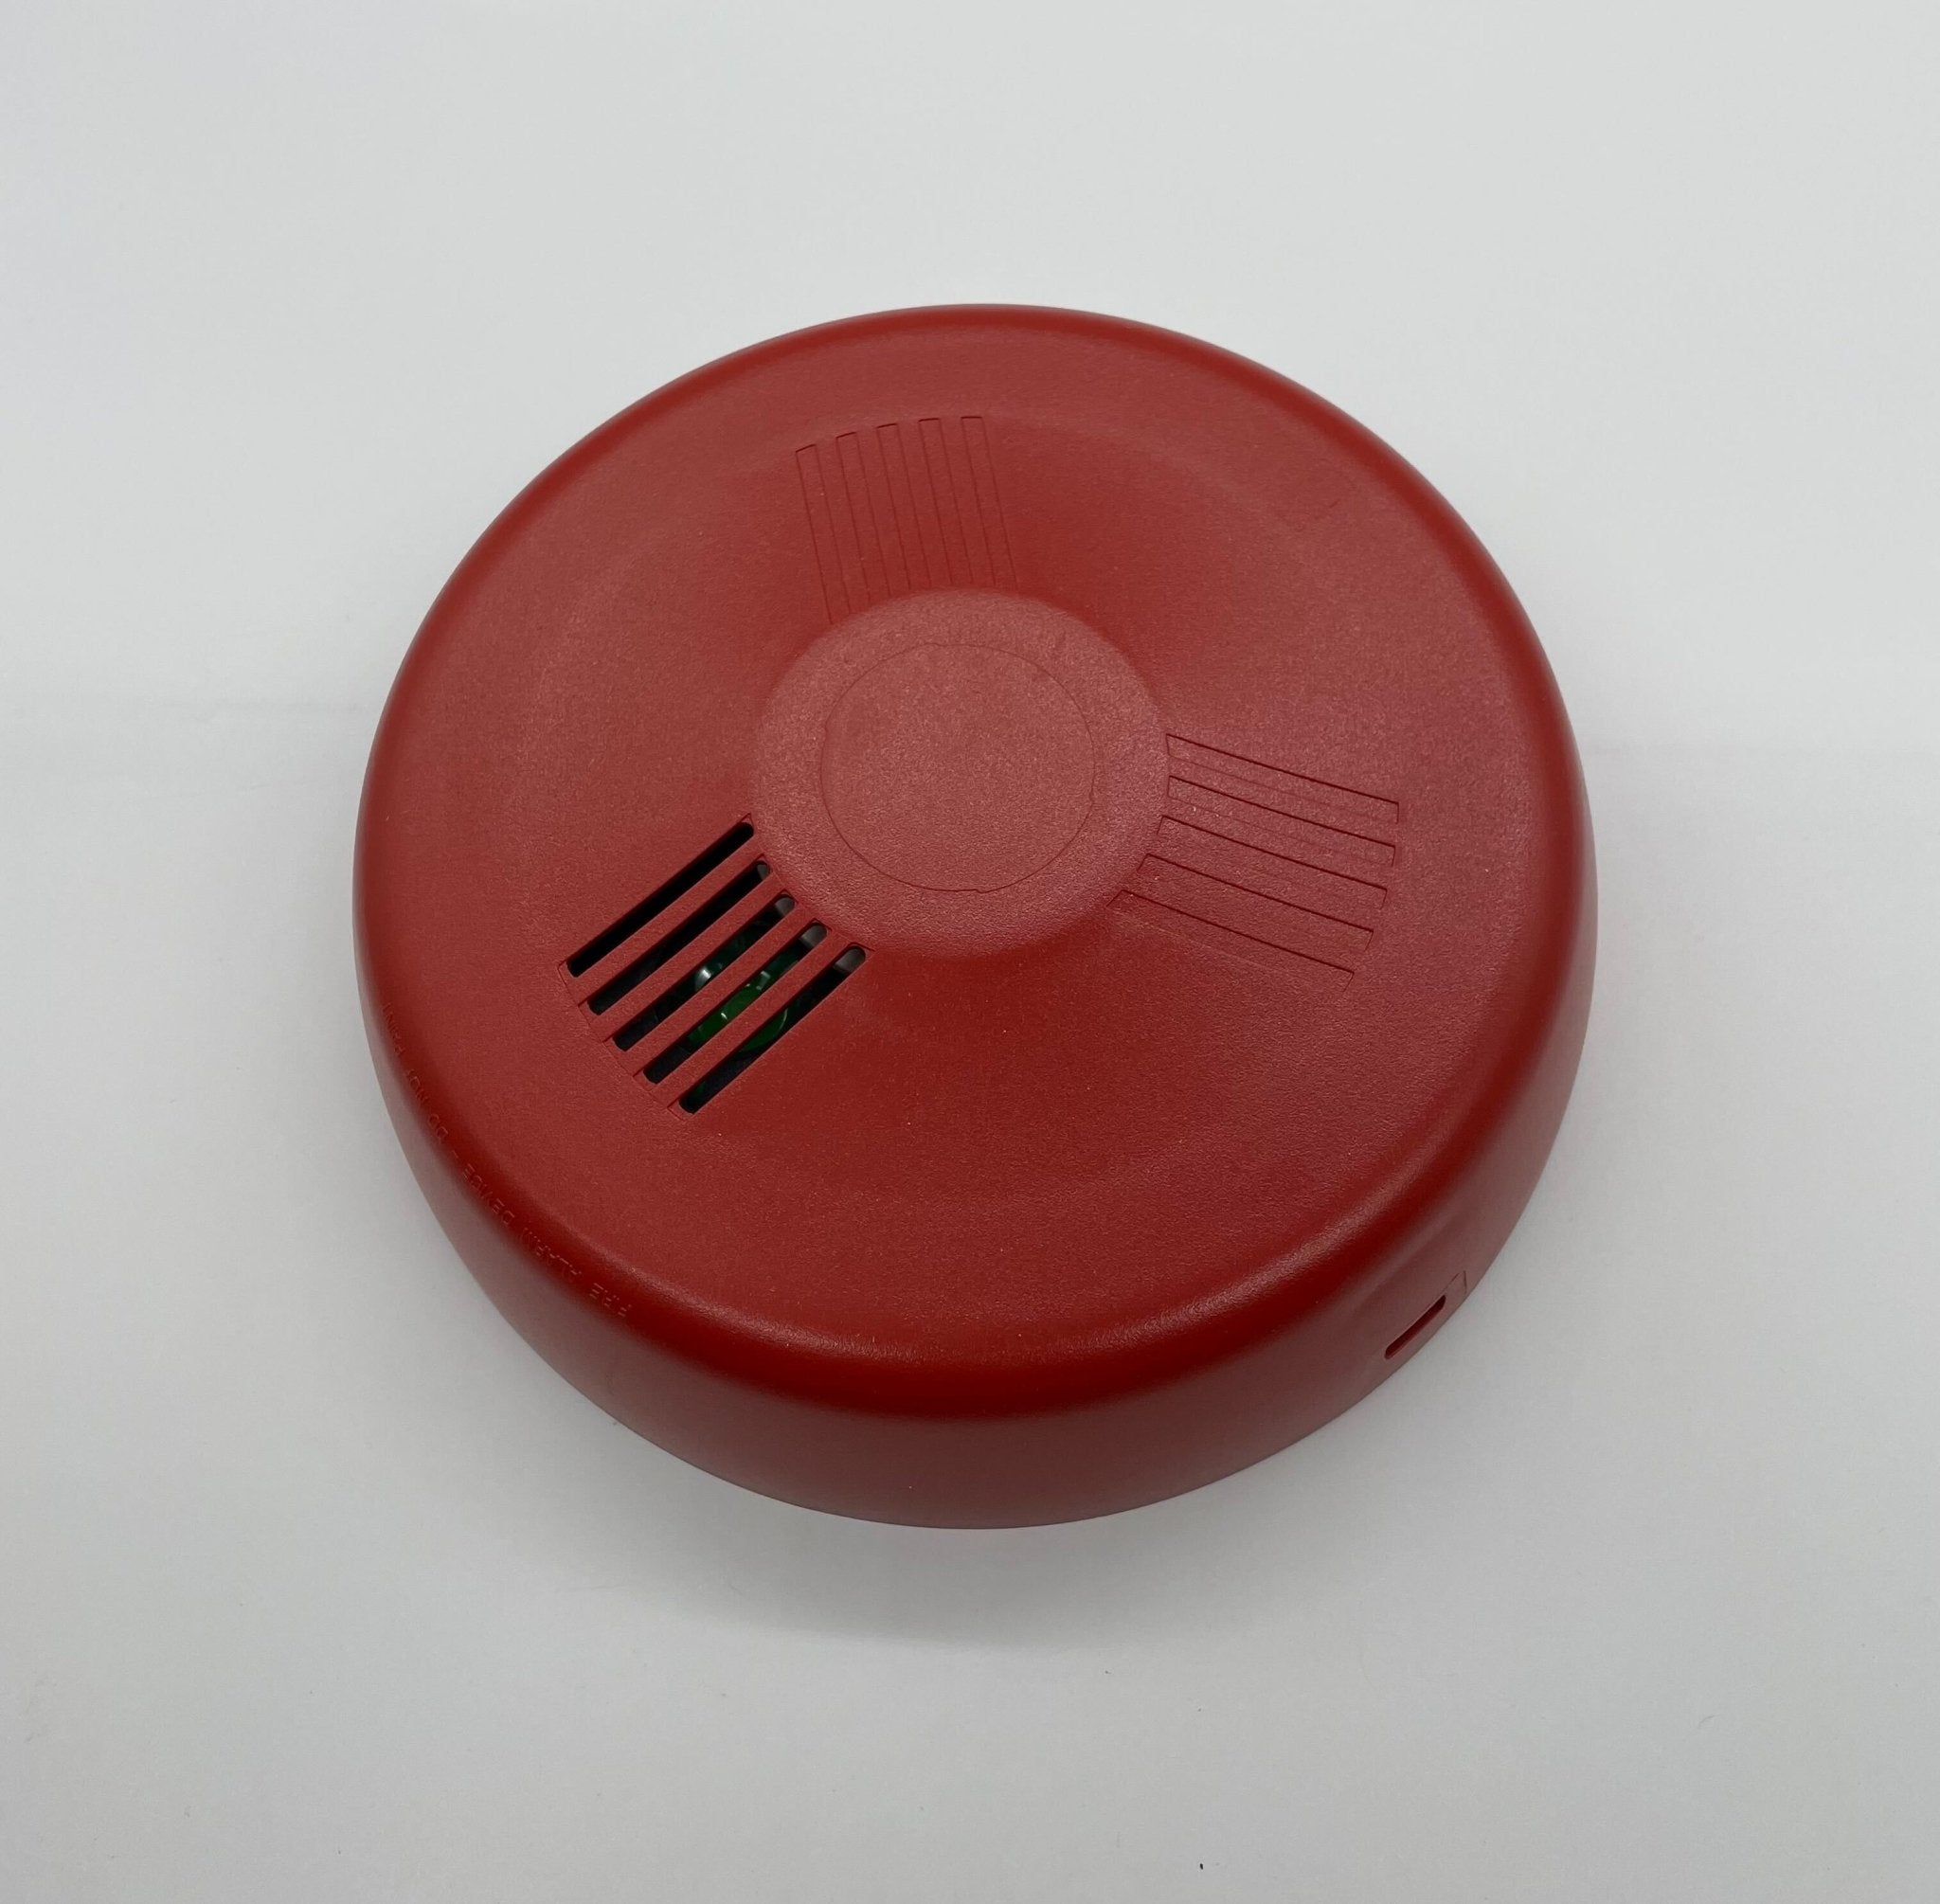 Wheelock LHNRC3 - The Fire Alarm Supplier